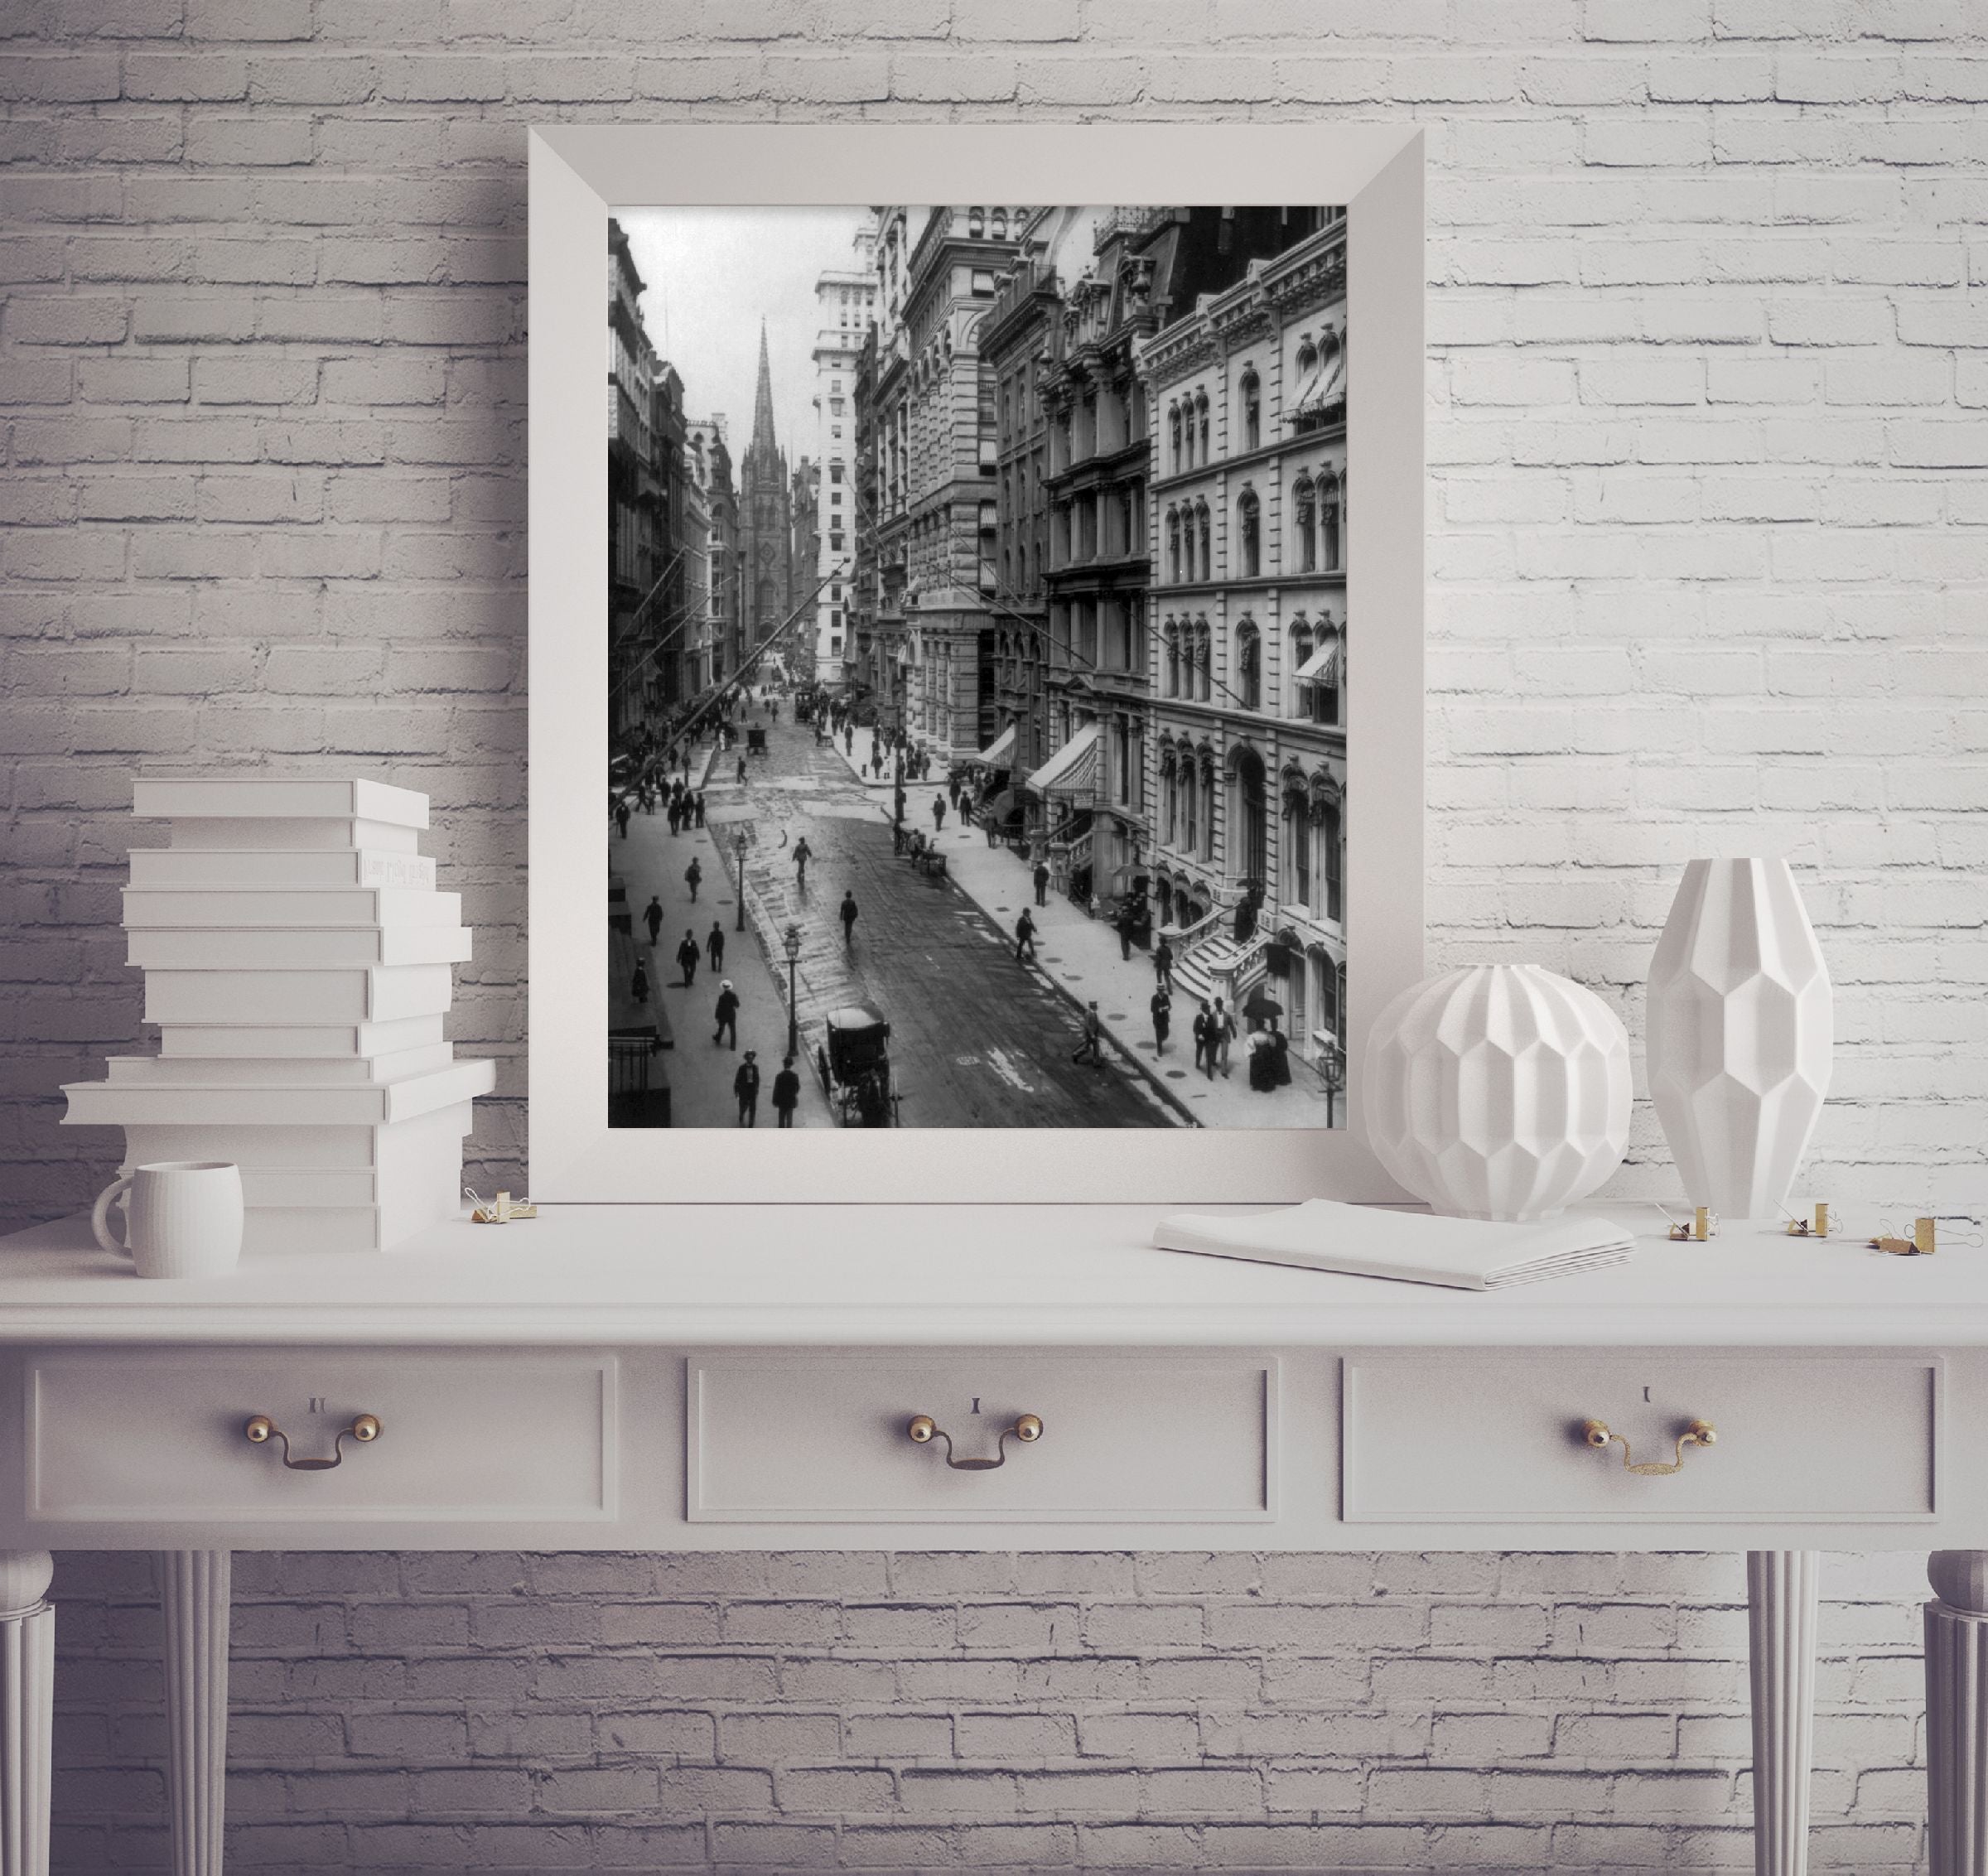 Photo: Wall Street, Broadway, New York City, NYC, c1904, street scene, pedestrians, c19